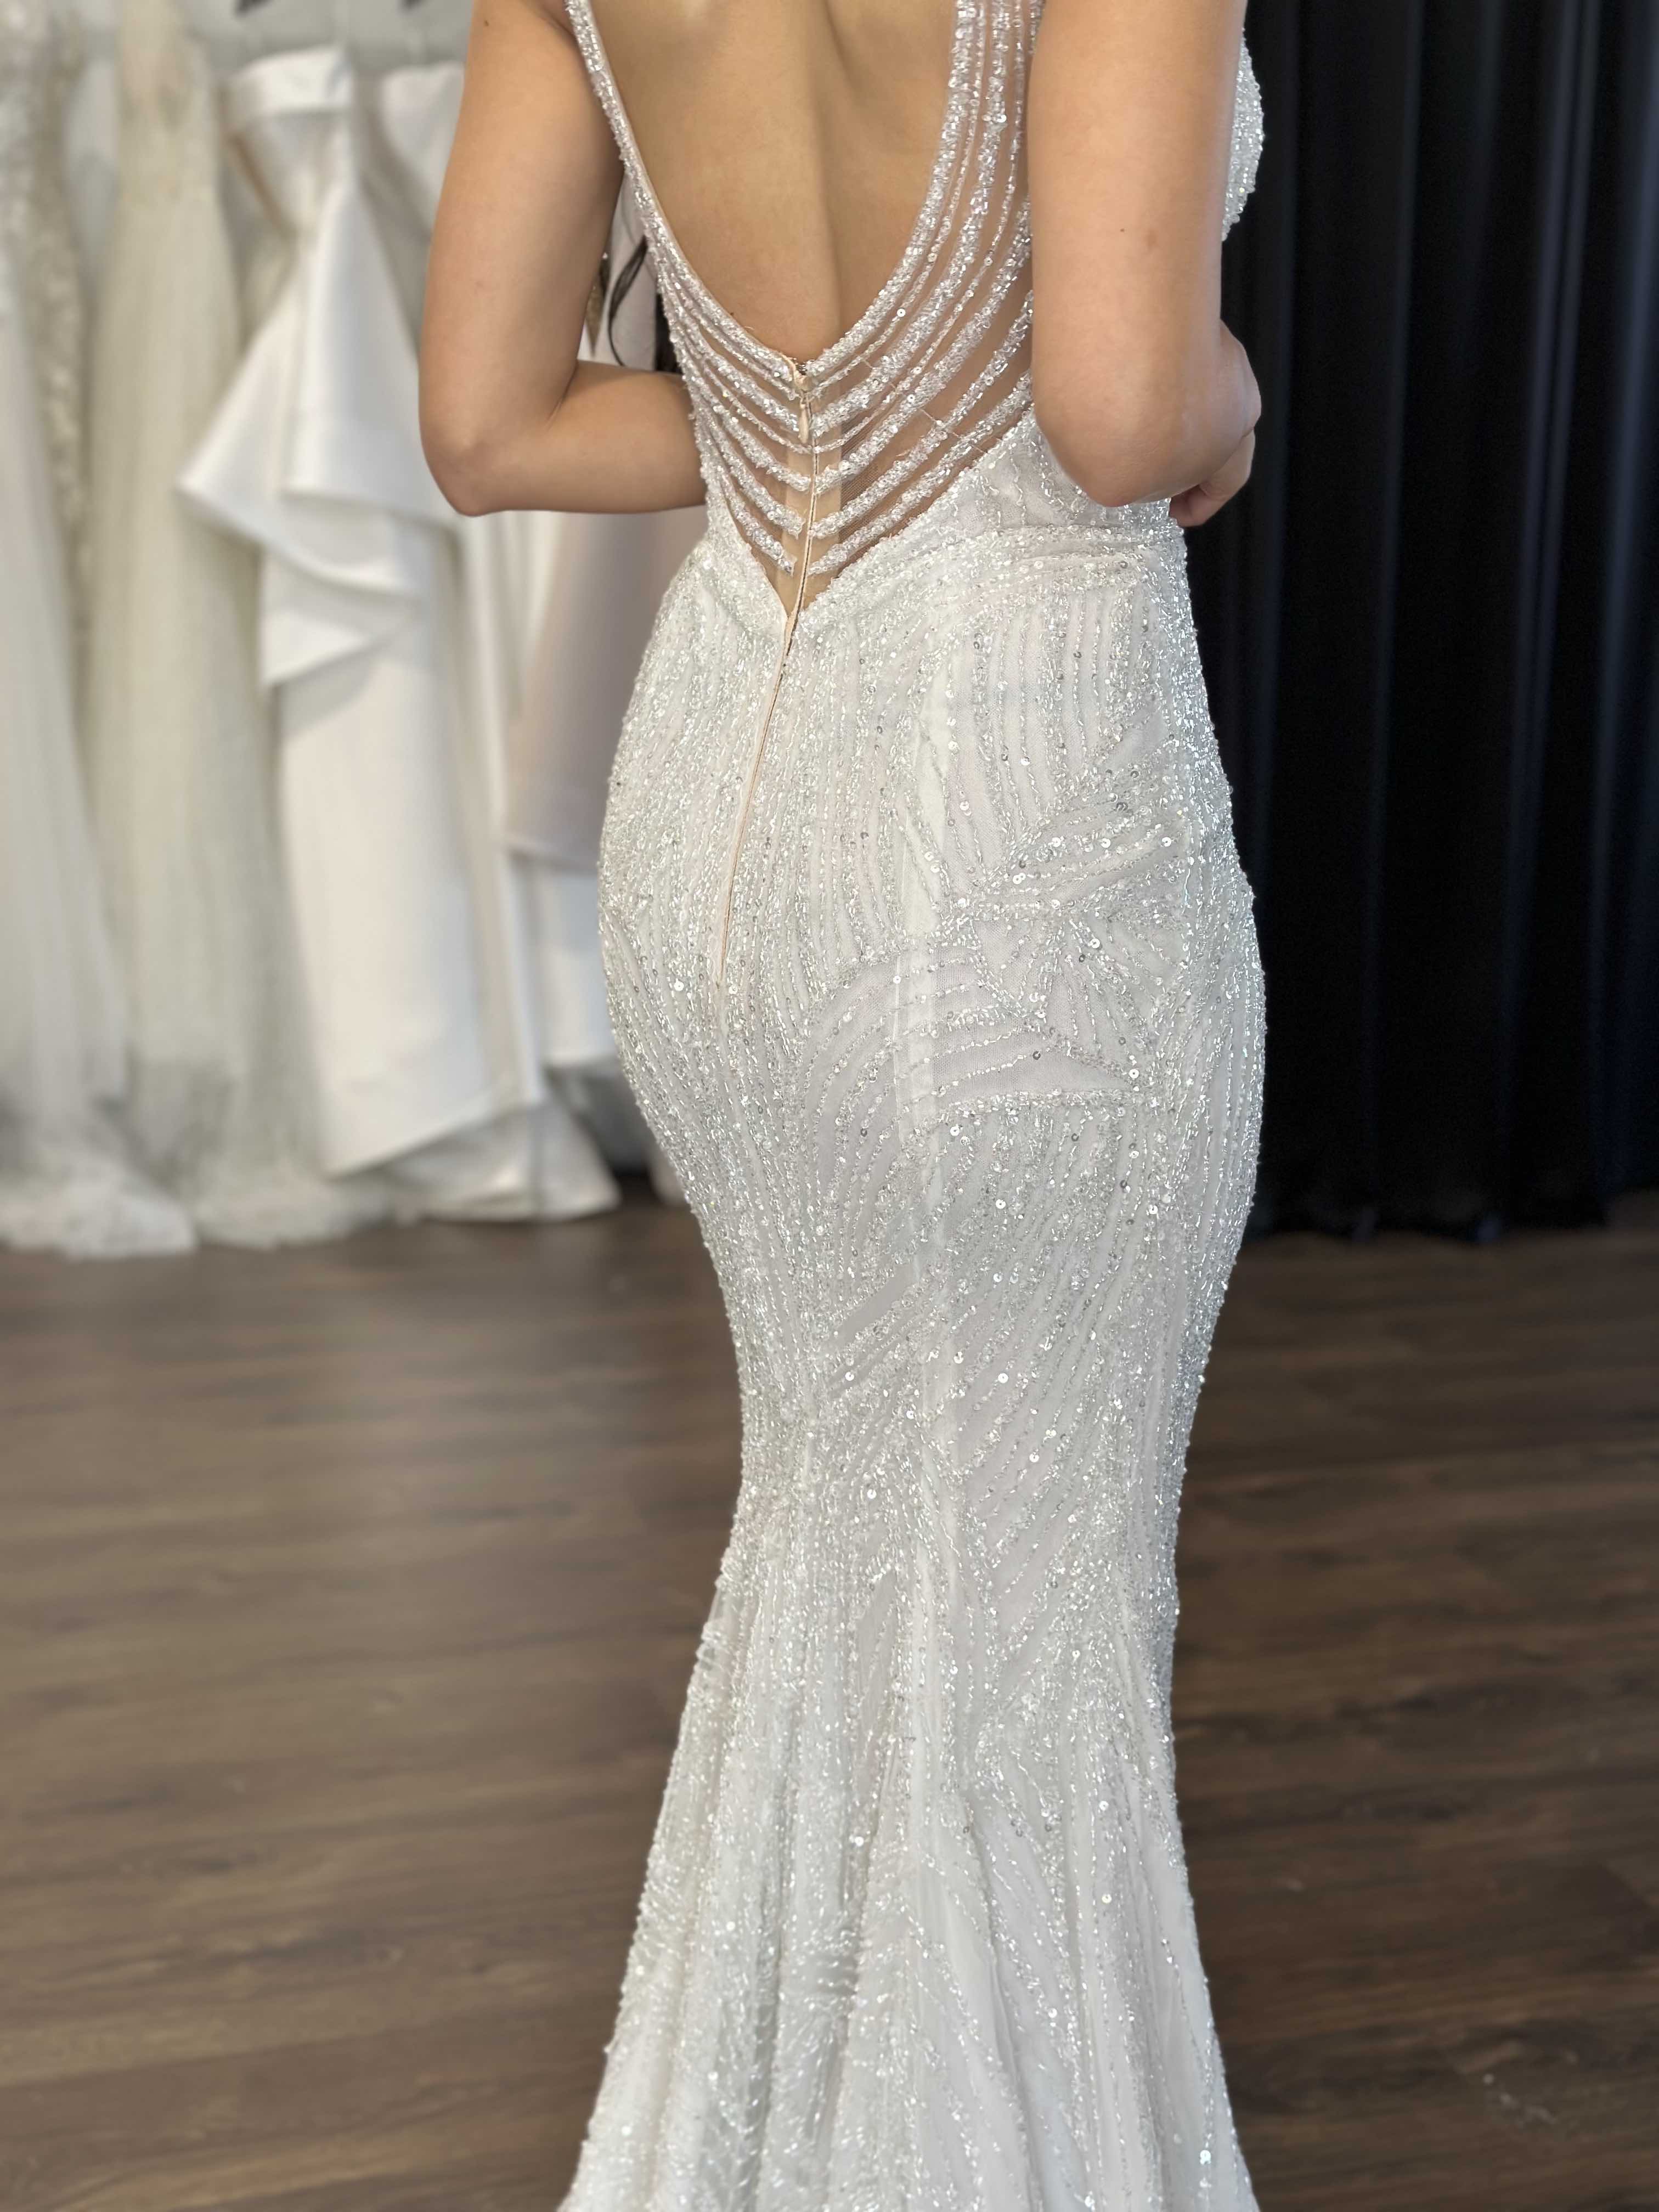 u-back beaded lace wedding dress on woman